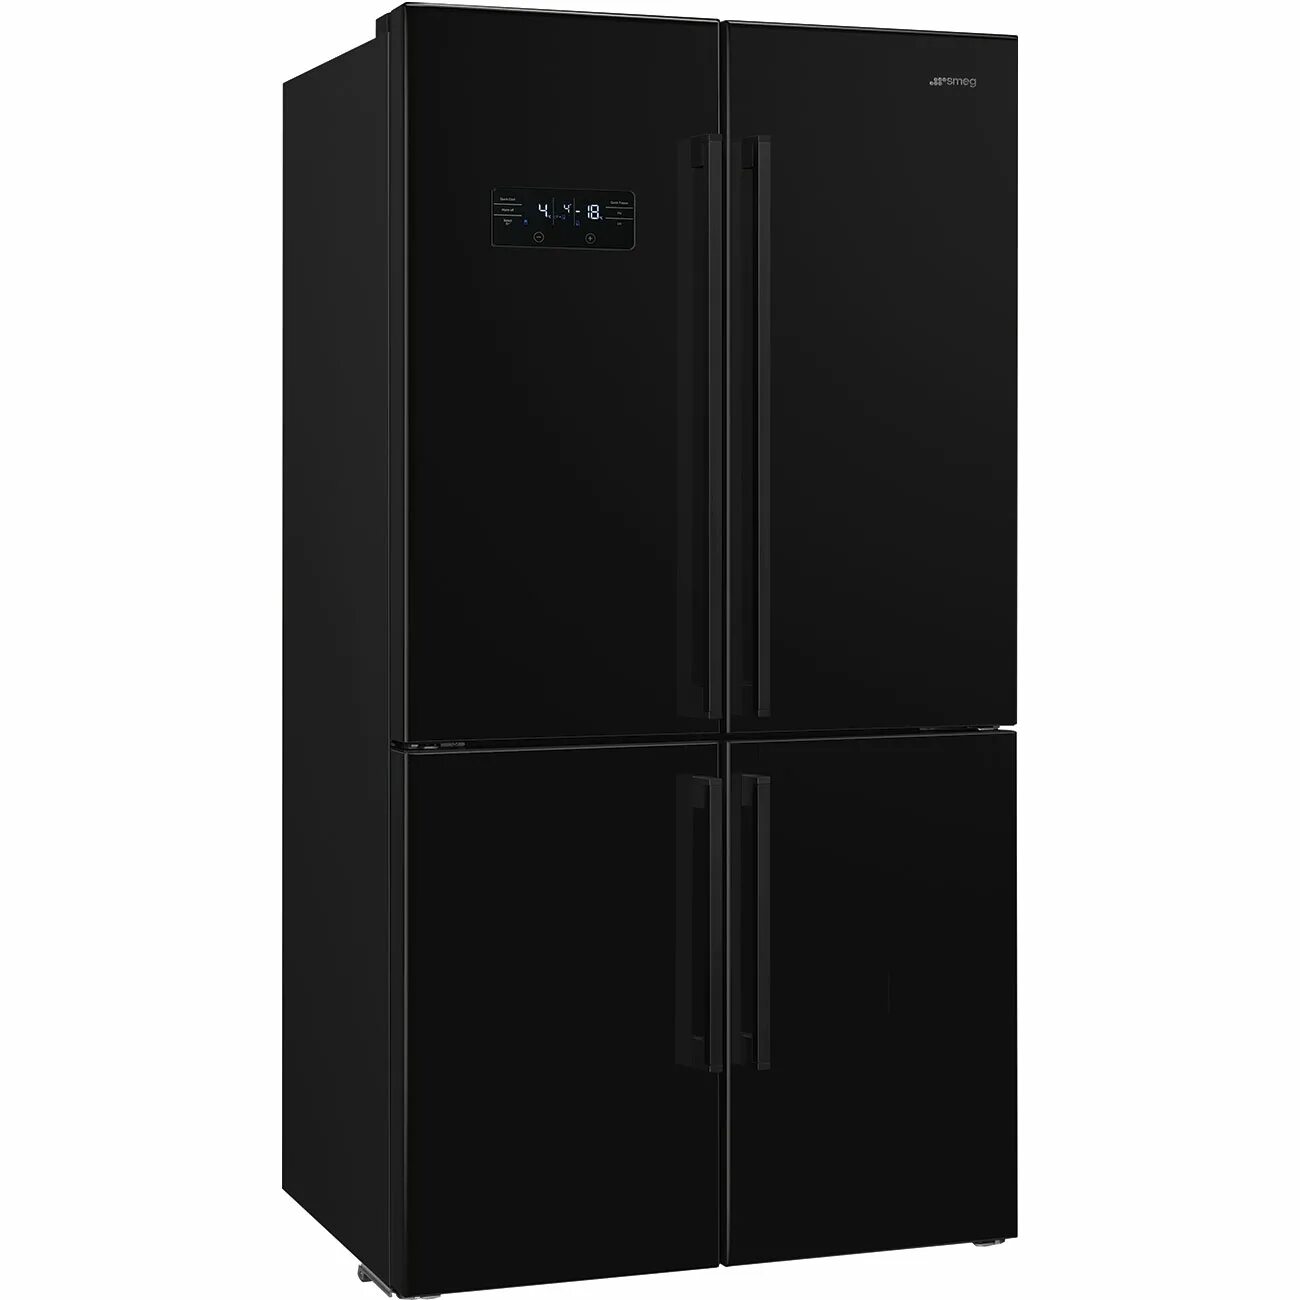 Холодильник Smeg Side by Side. Холодильник Smeg fq60ndf черный. Холодильник Smeg sbs8004p. Холодильник (Side-by-Side) Smeg fq60ndf.